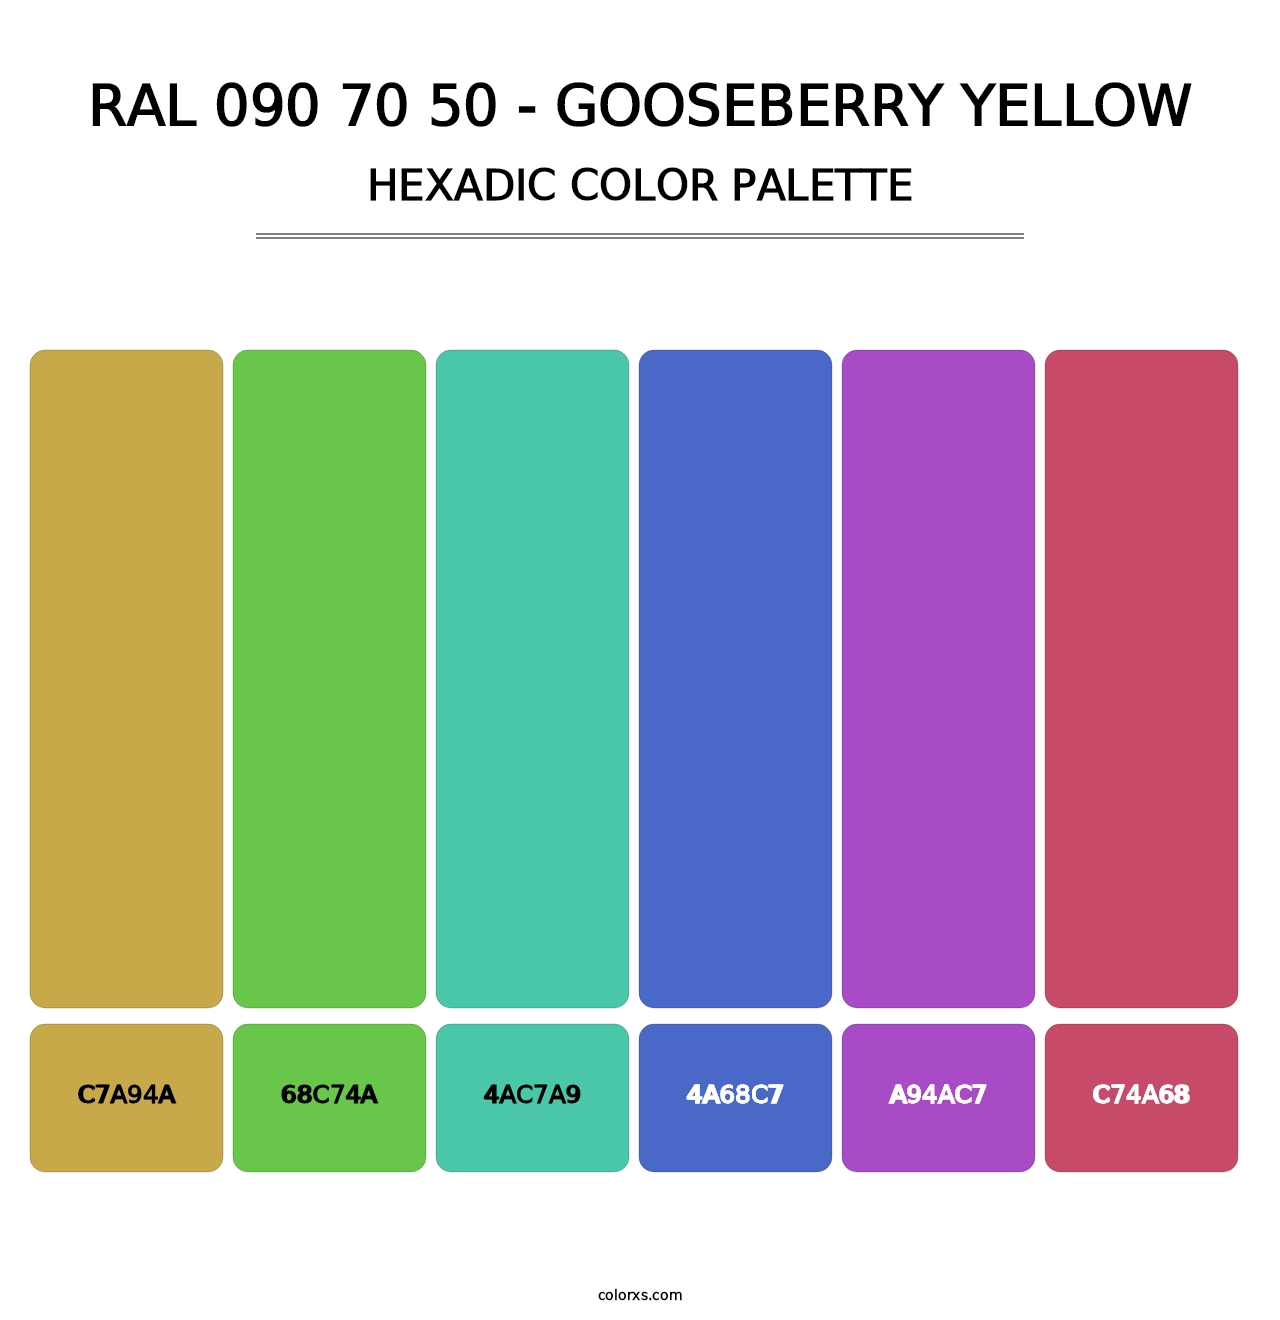 RAL 090 70 50 - Gooseberry Yellow - Hexadic Color Palette